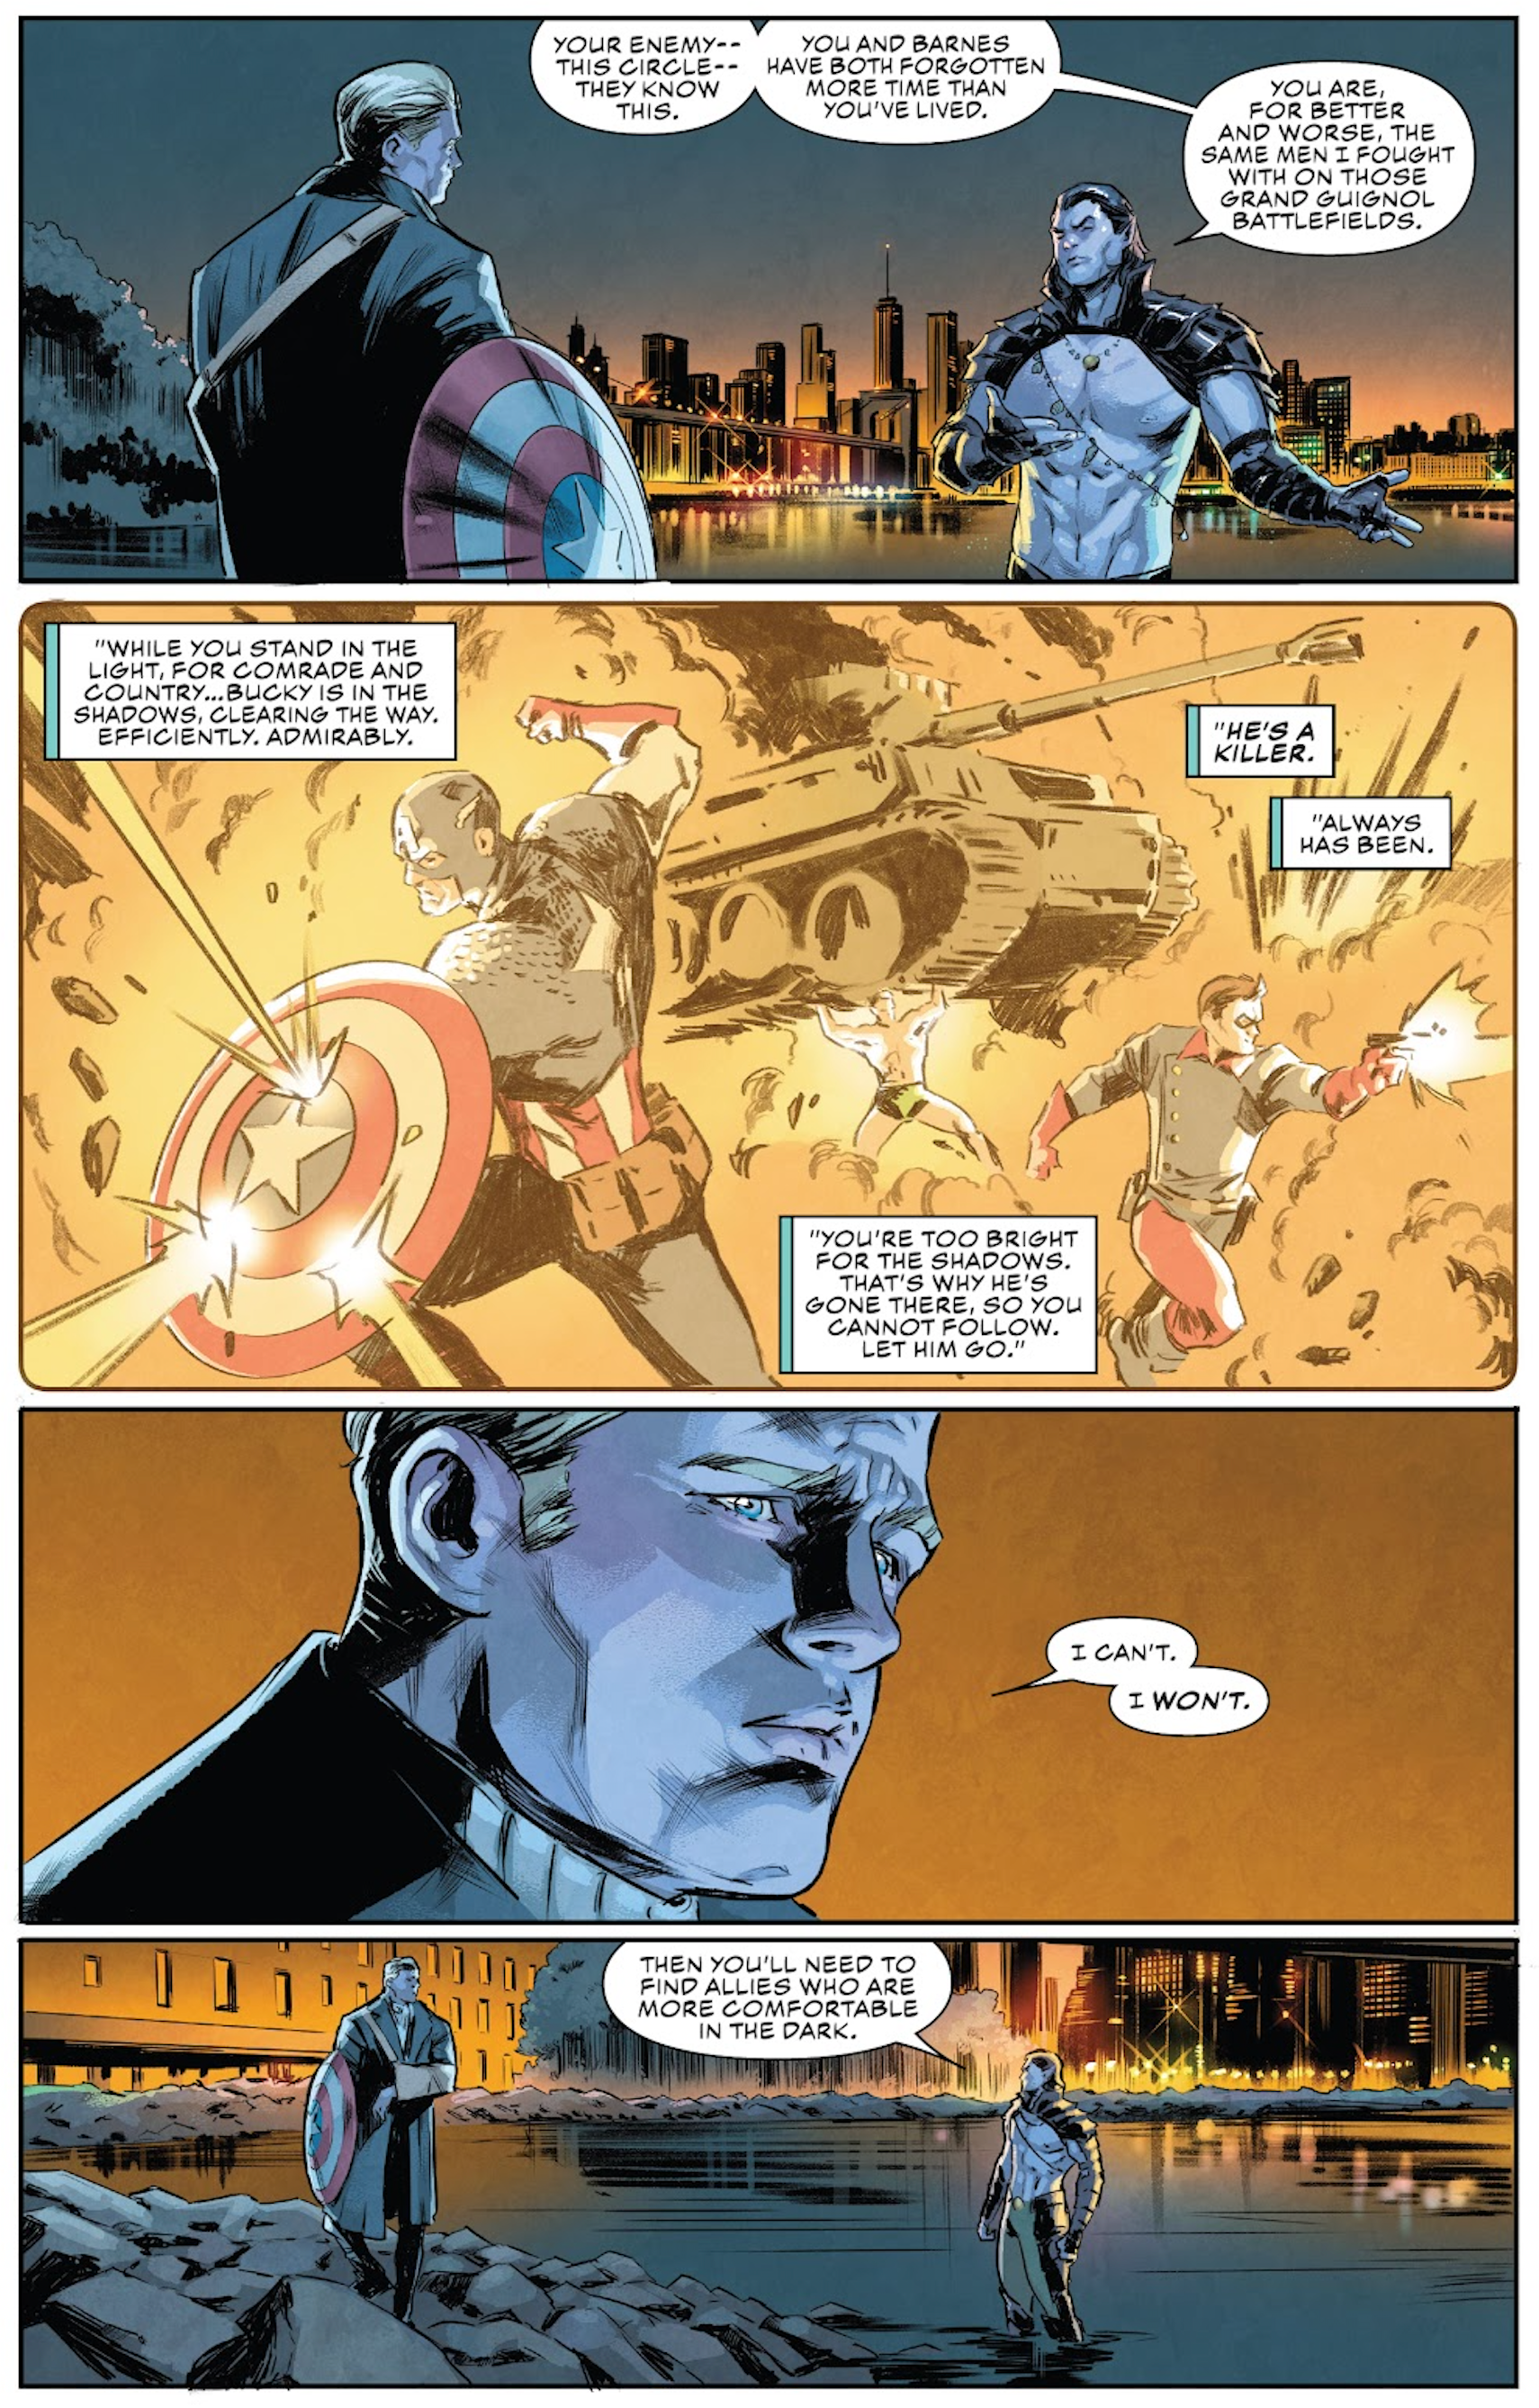 Captain America and Namor discuss Bucky